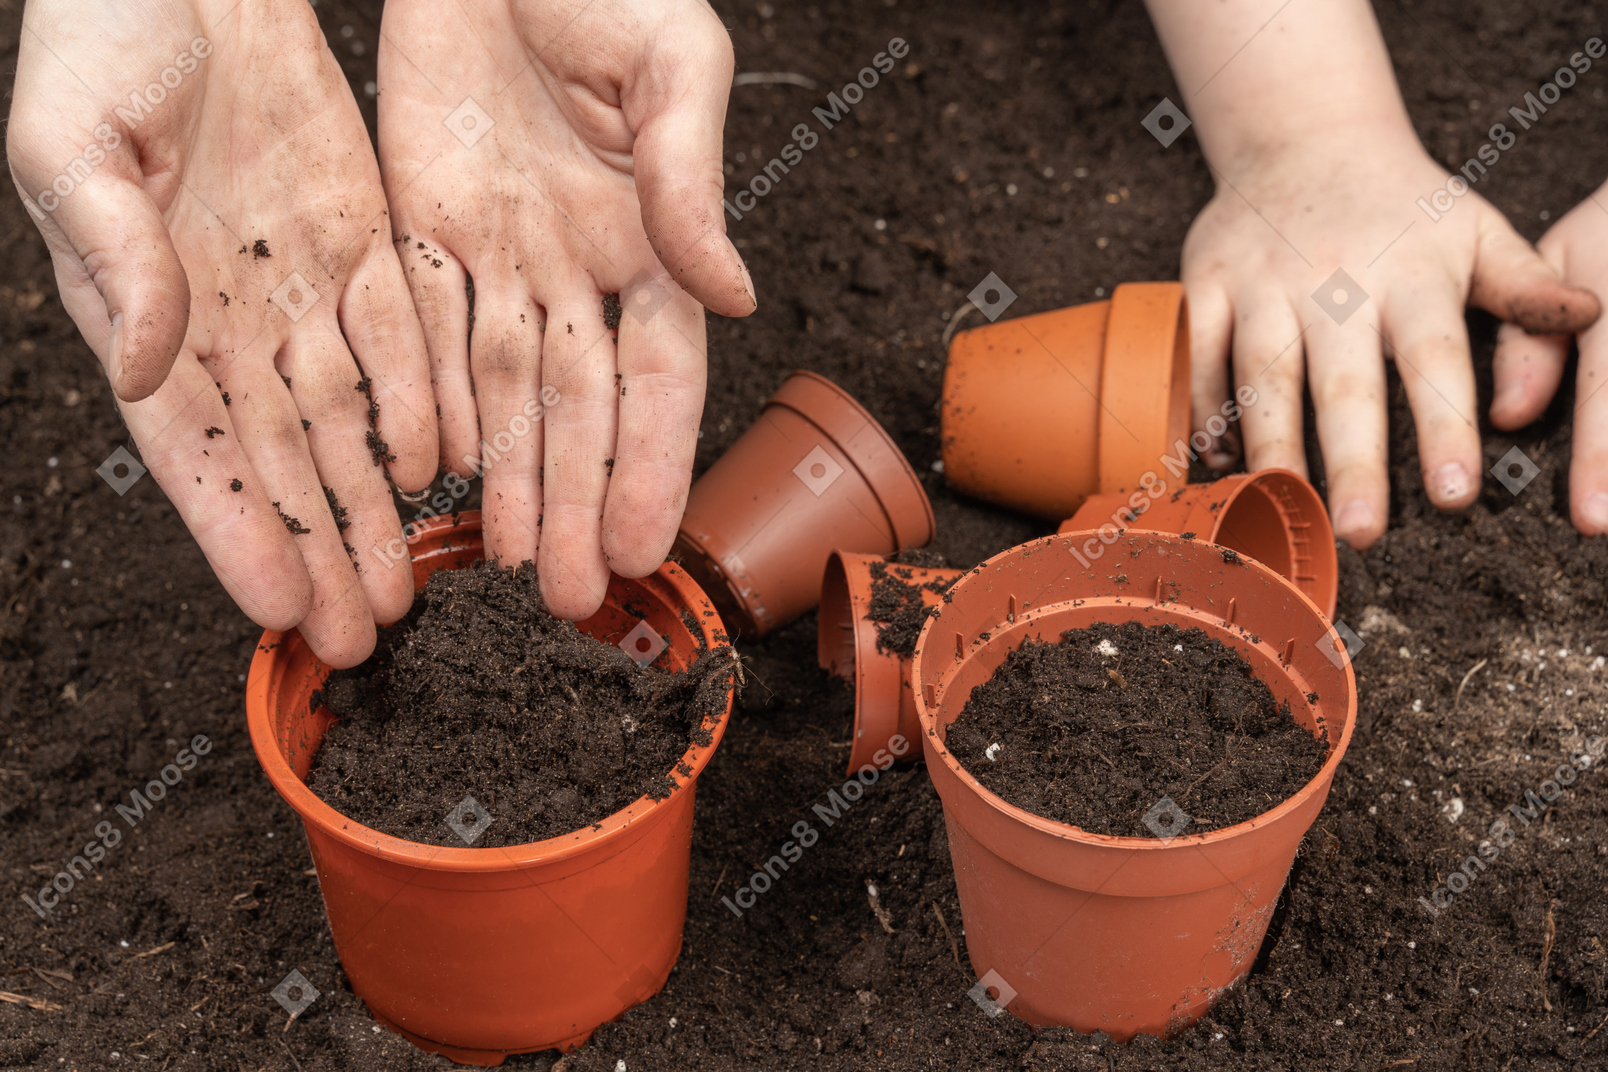 Human hands putting soil into pots